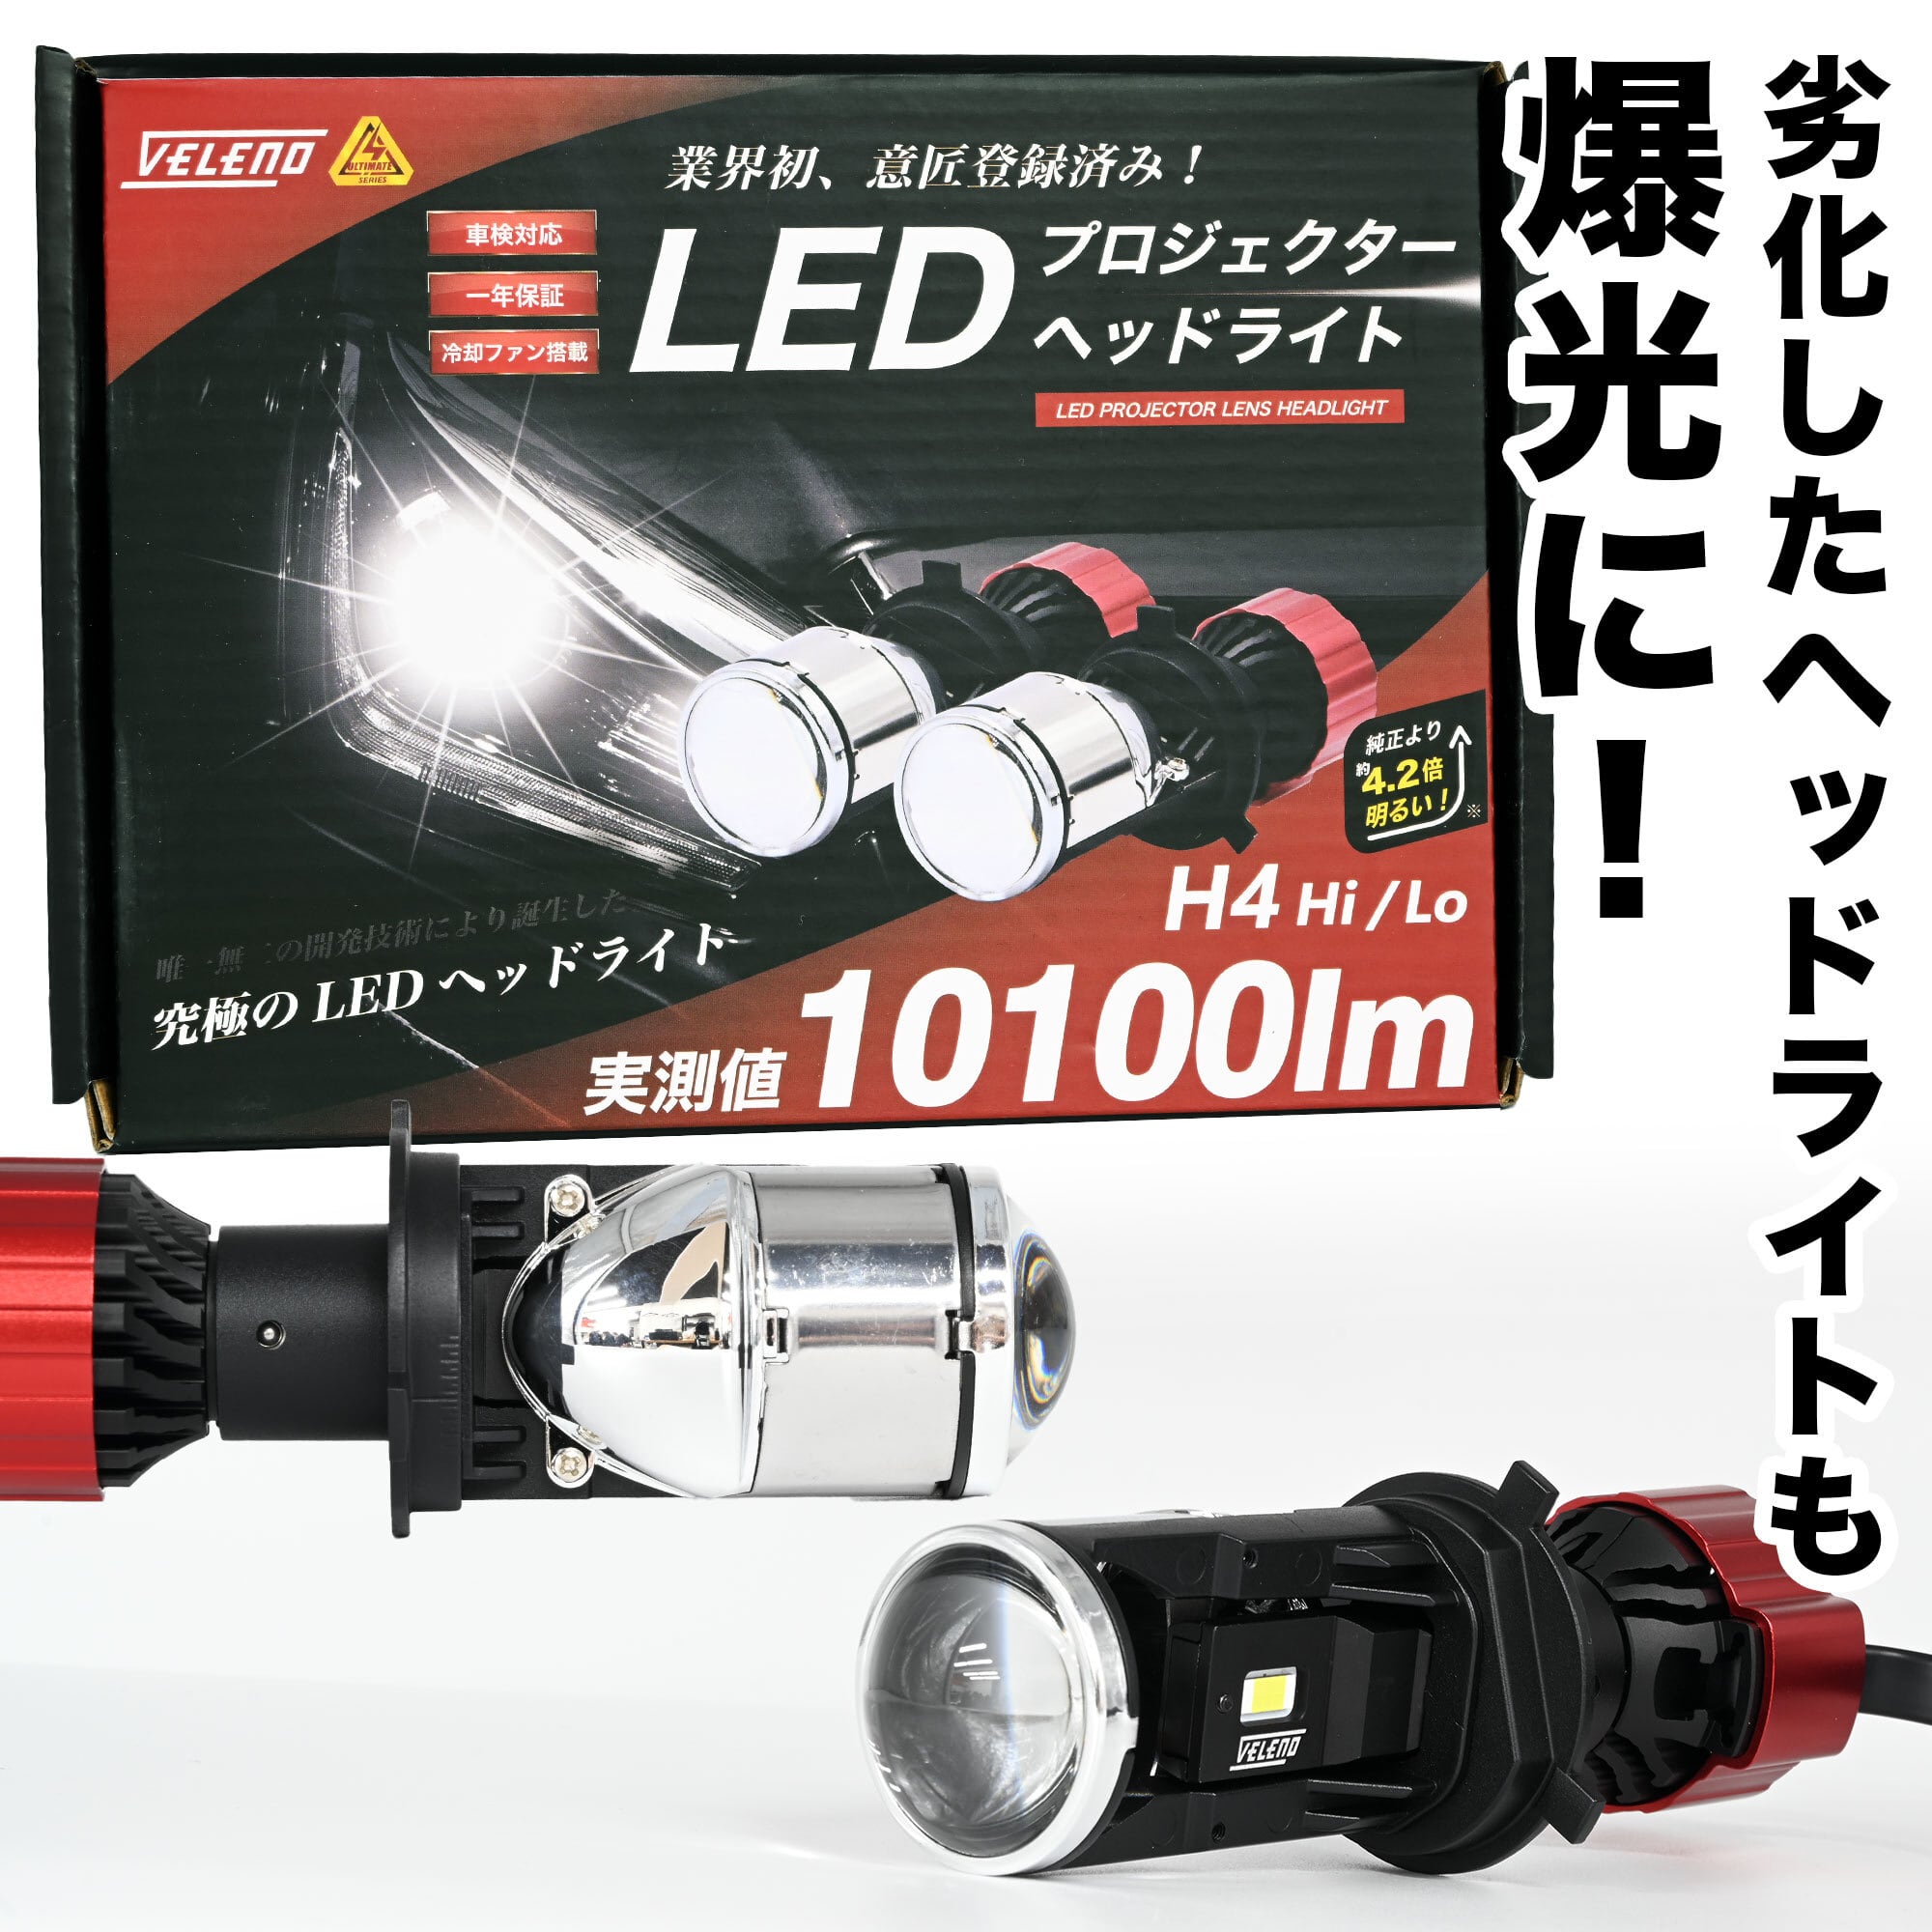 VELENO ULTIMATE LEDヘッドライト H4 Hi/Lo 10100lm | VELENO | ヴェレーノ